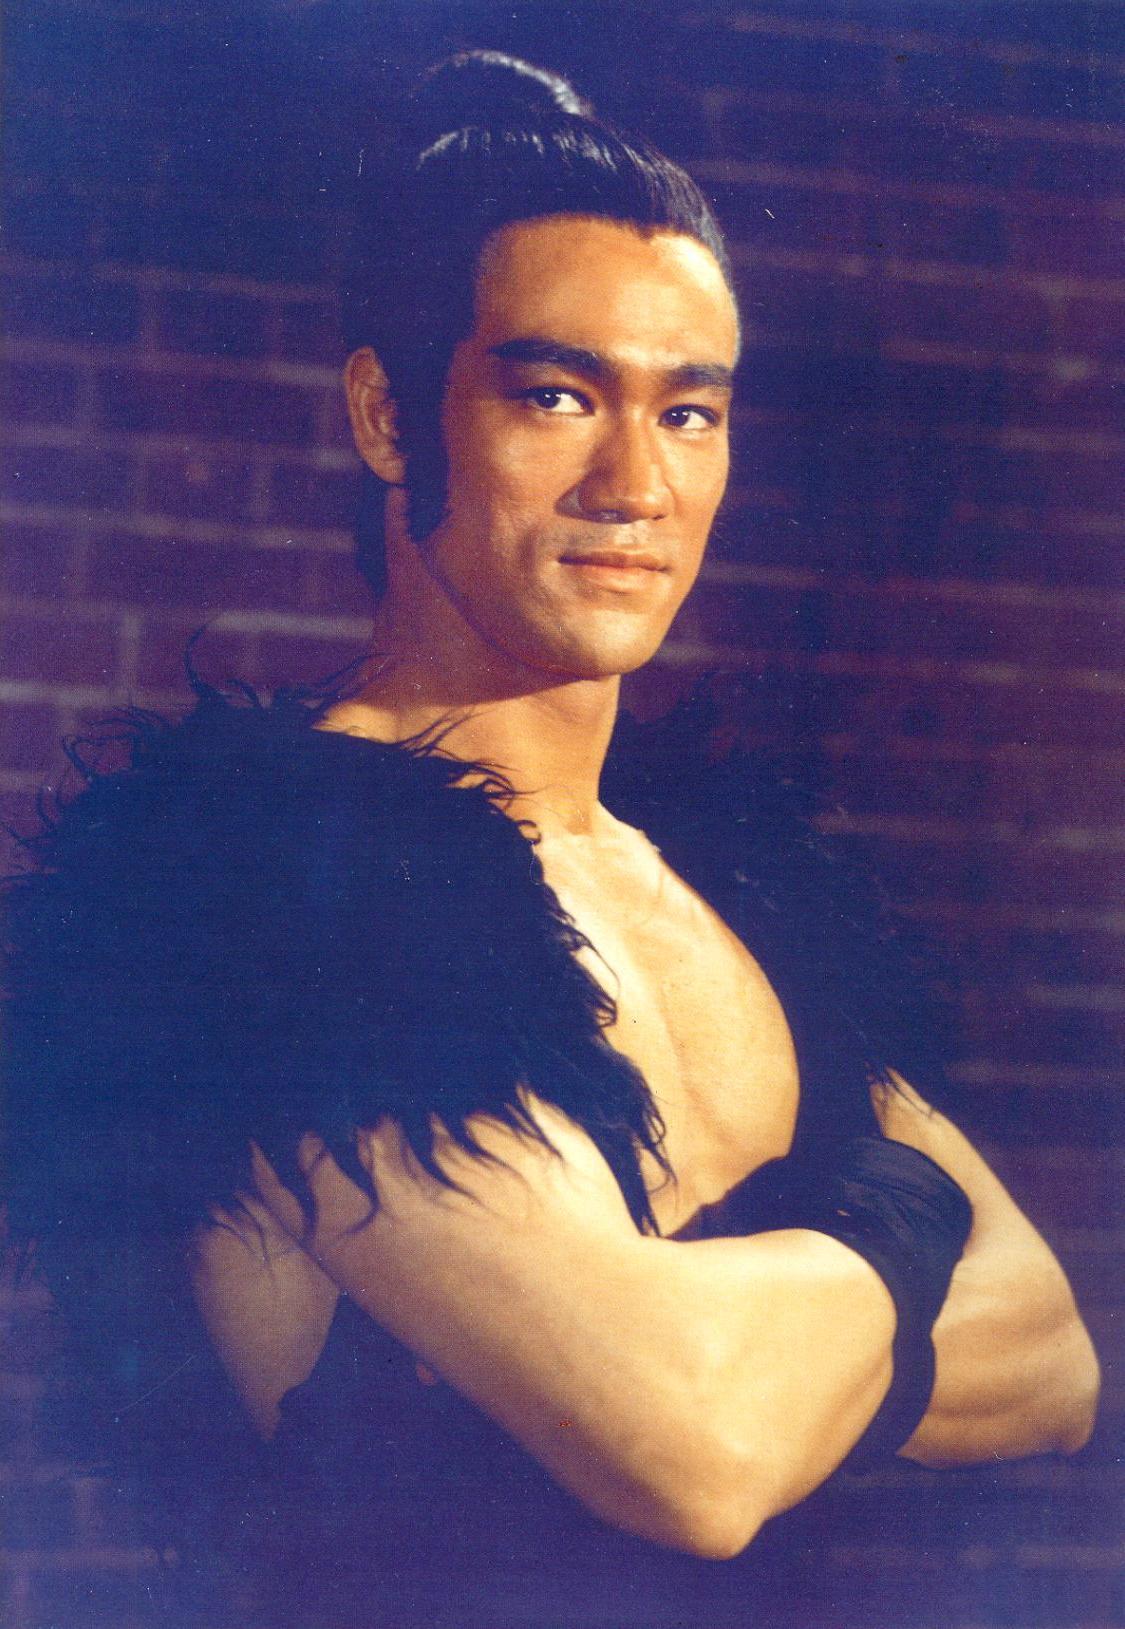 Bruce Lee wallpaper №34980.